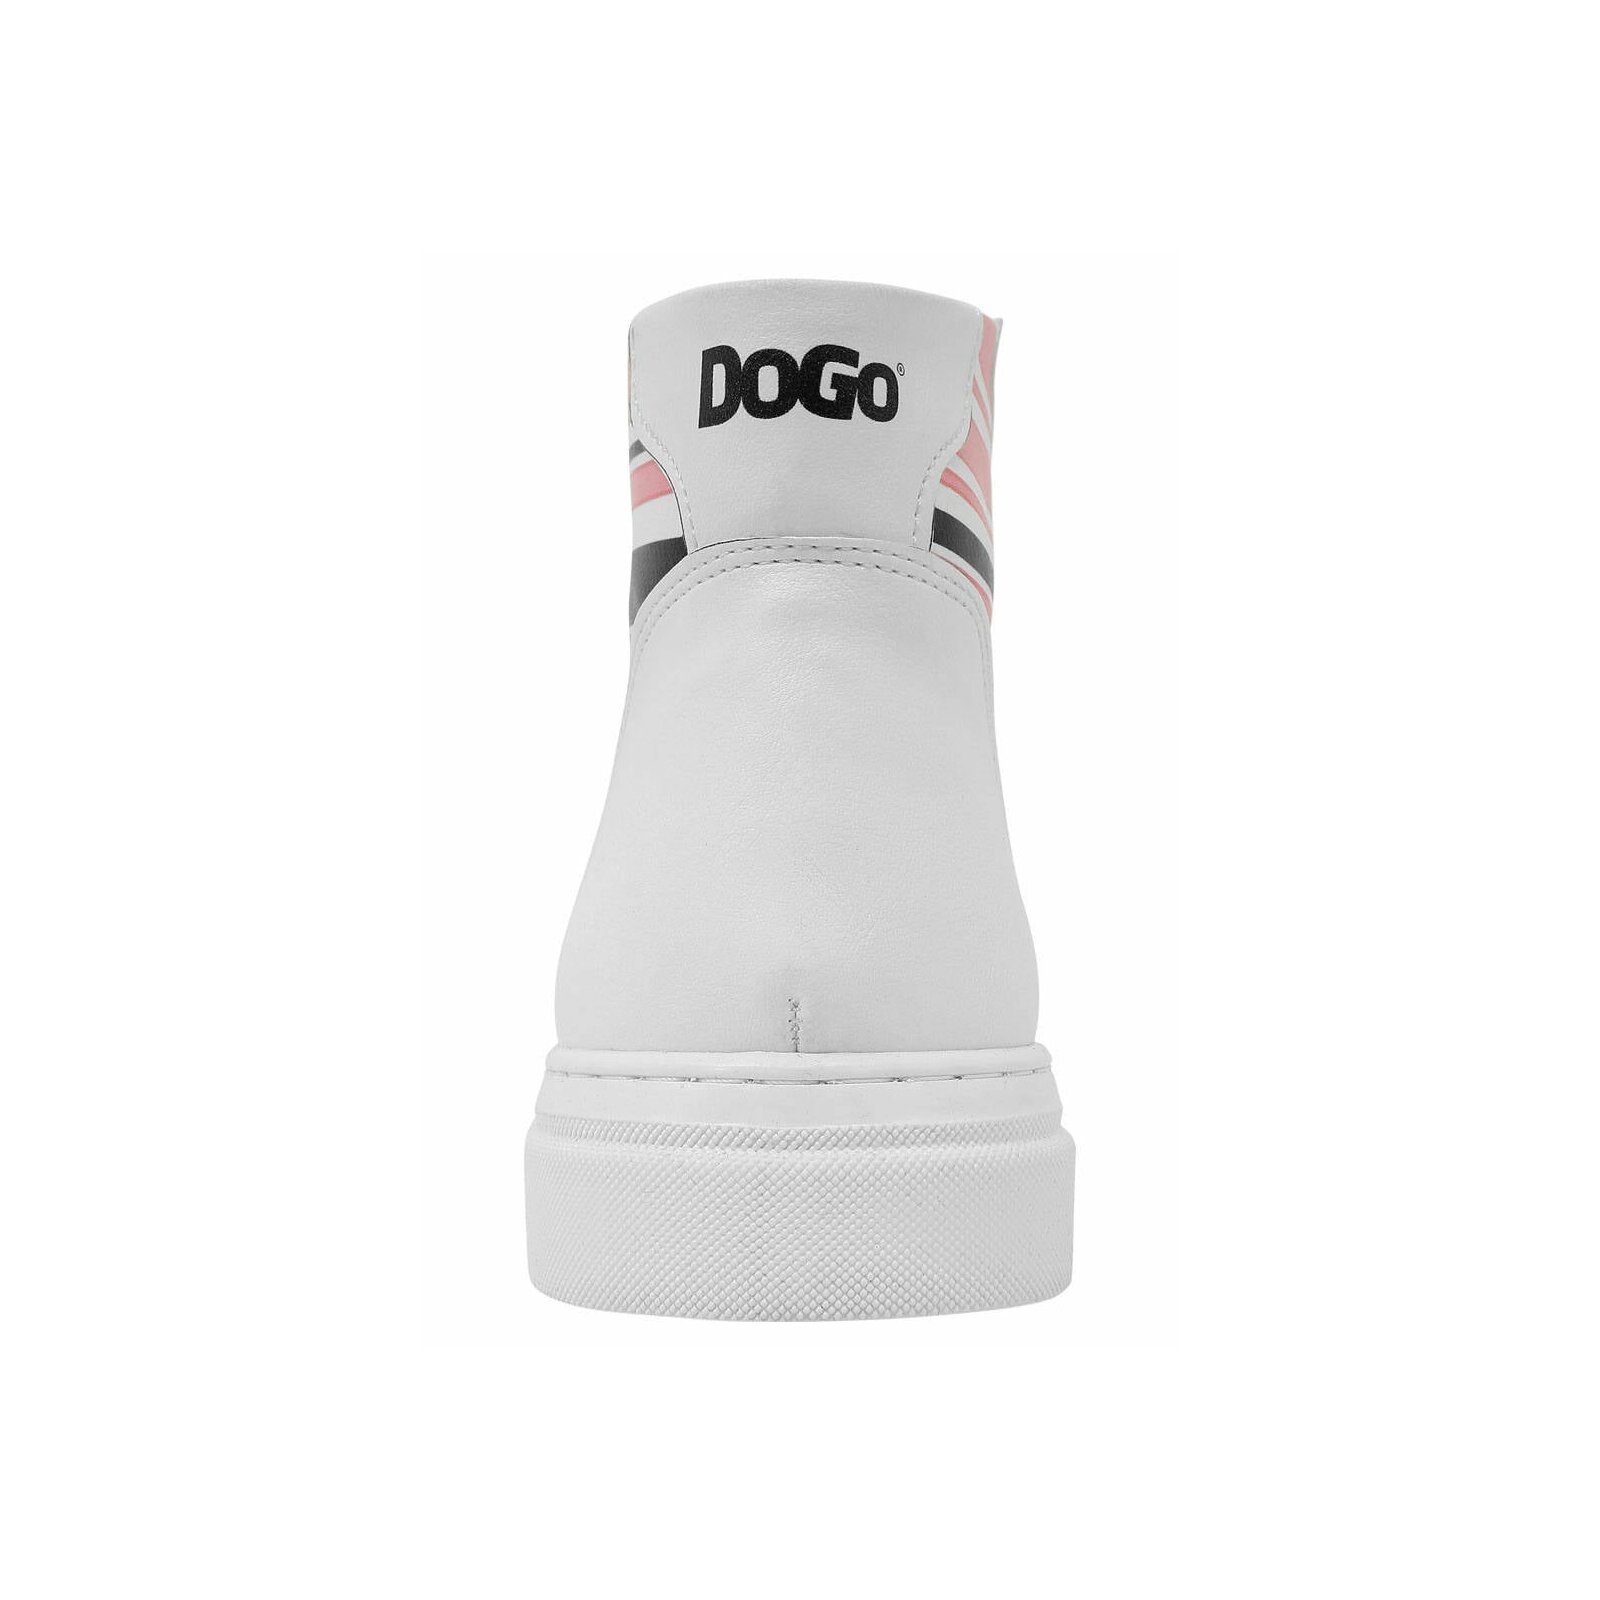 DOGO Ace Boots Stiefelette Rosa Vegan